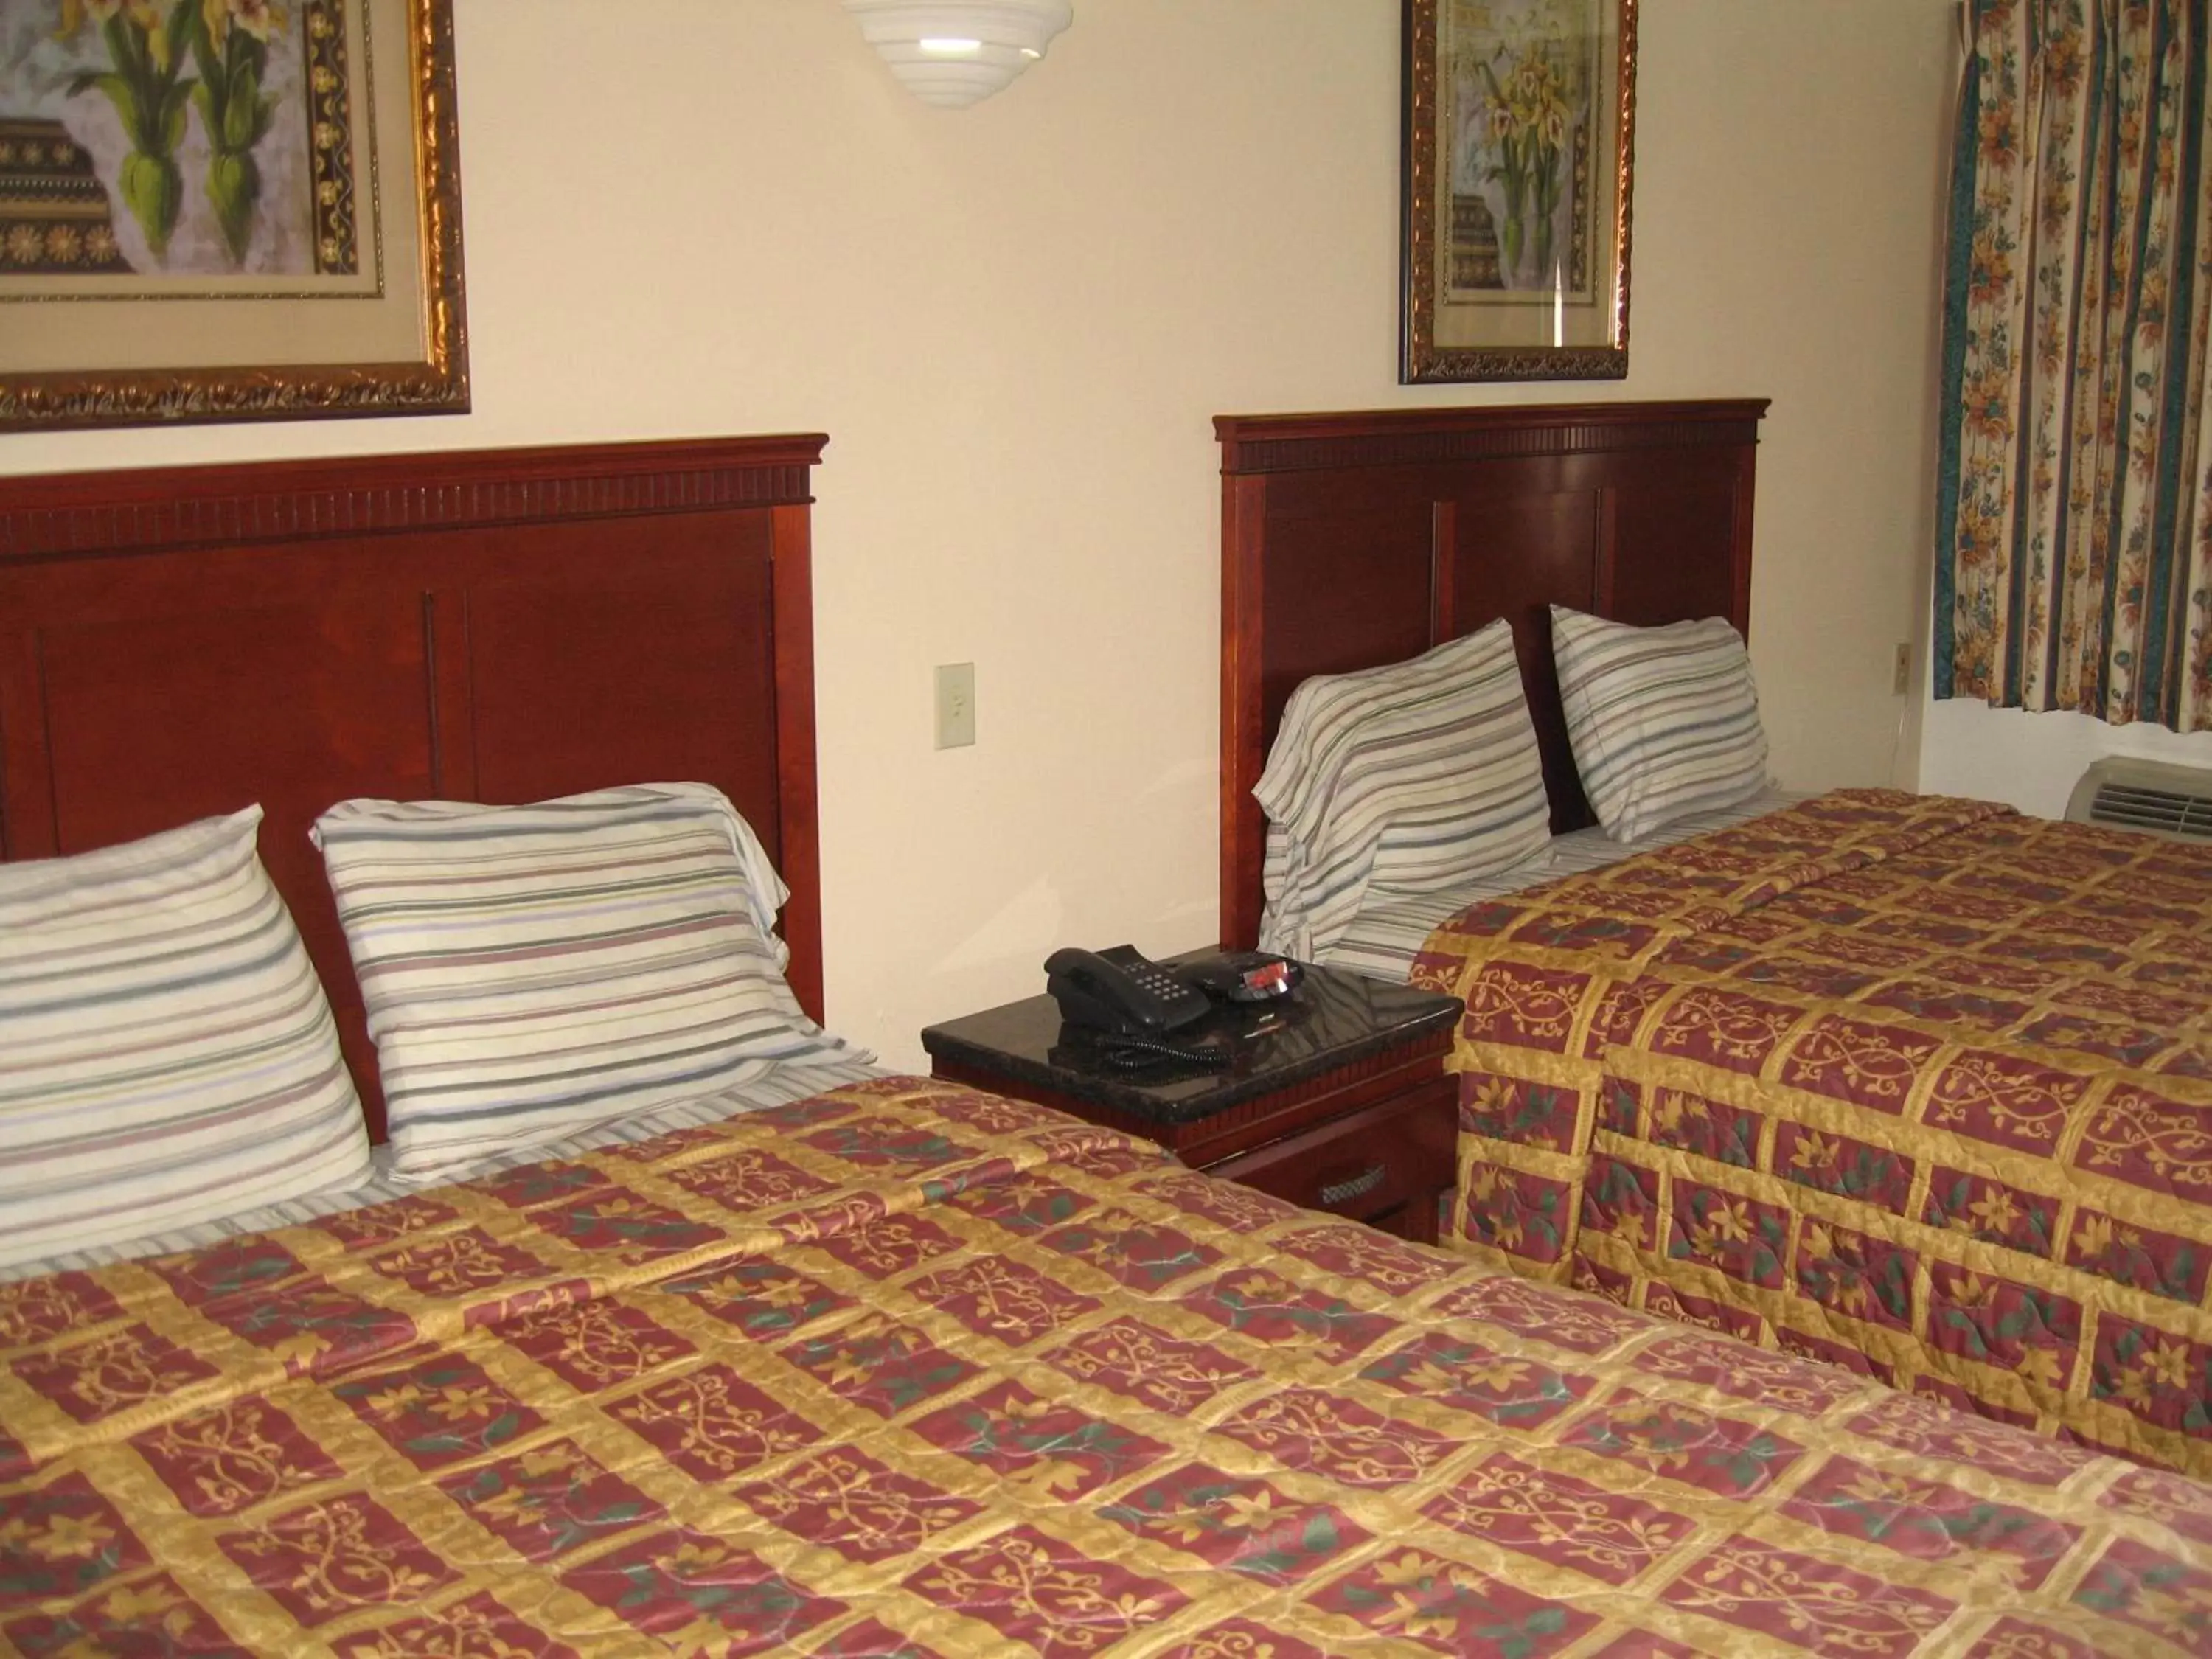 Decorative detail, Bed in Royal Inn Motel Long Beach